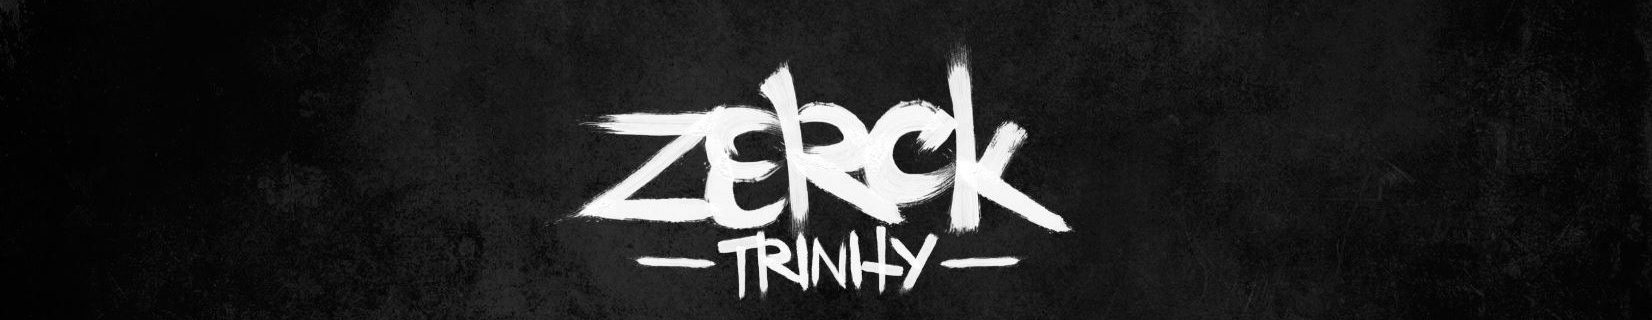 Zerck Trinitys profilbanner